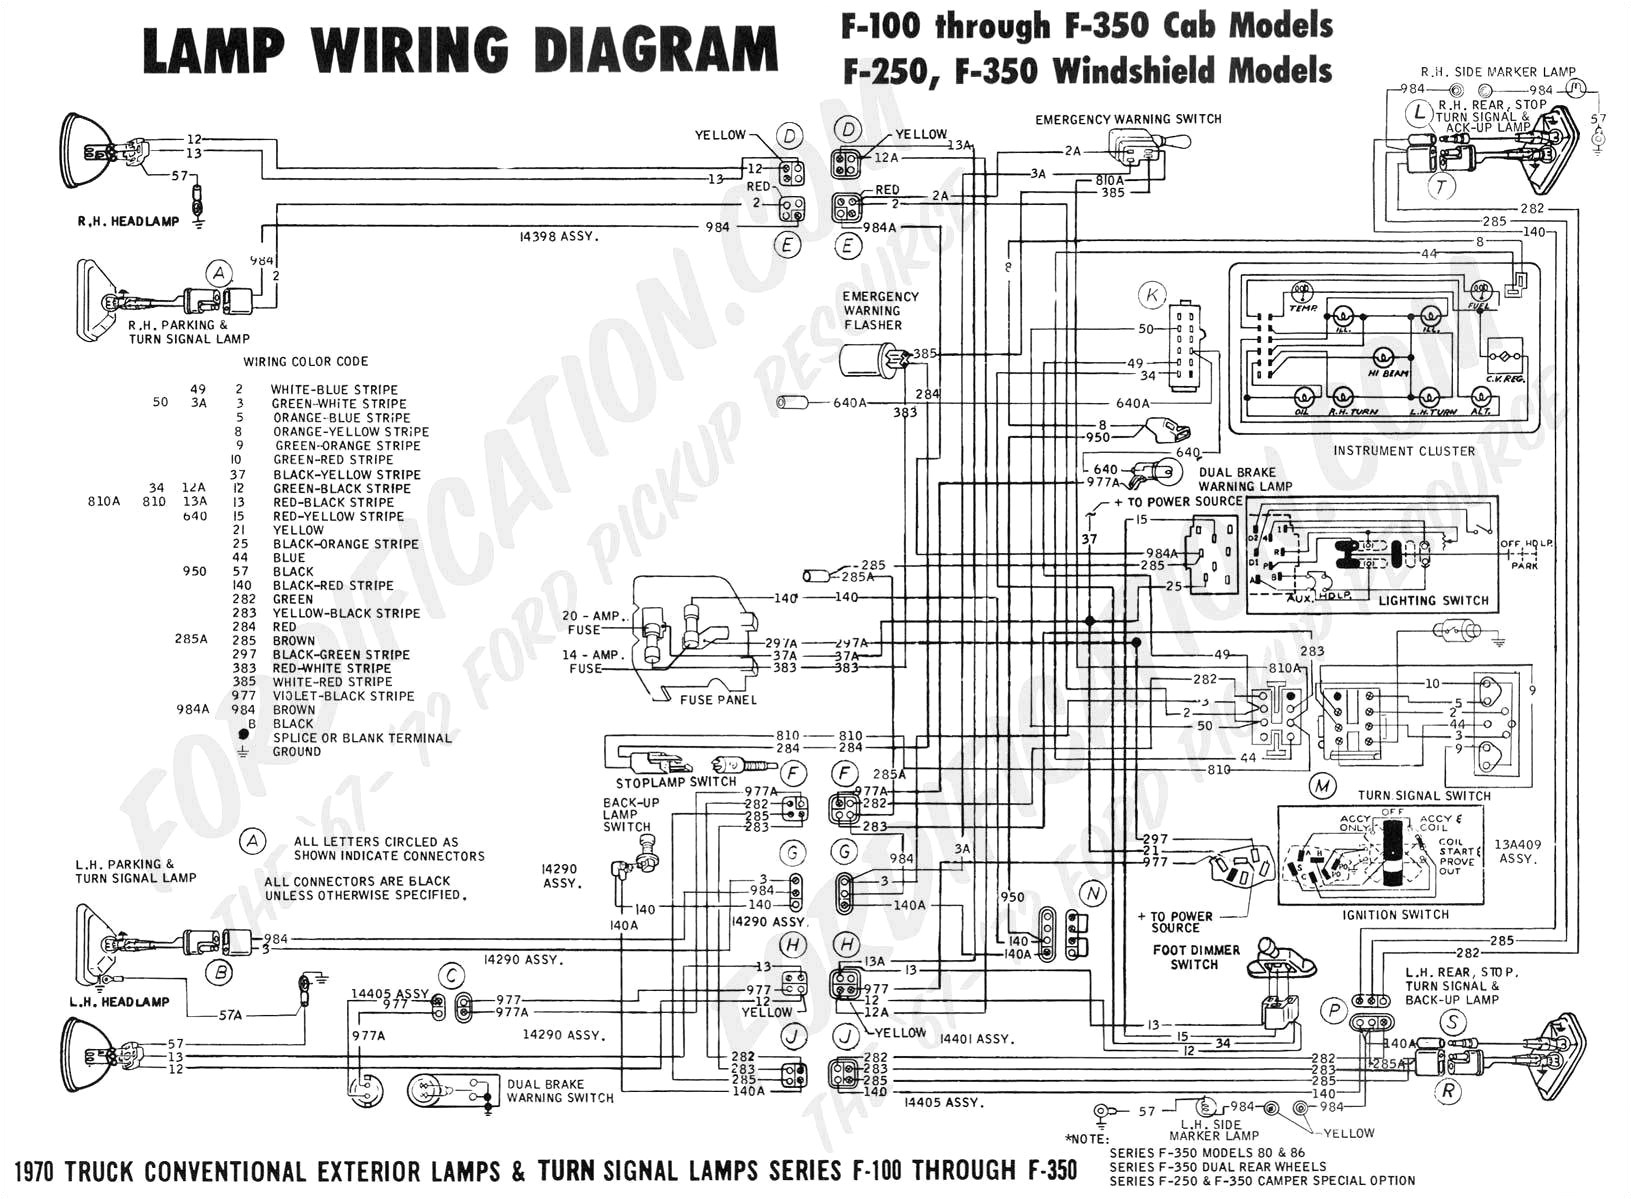 electrical diagram of the original bmw e31 turn signal lever switch bmw turn signal switch wiring